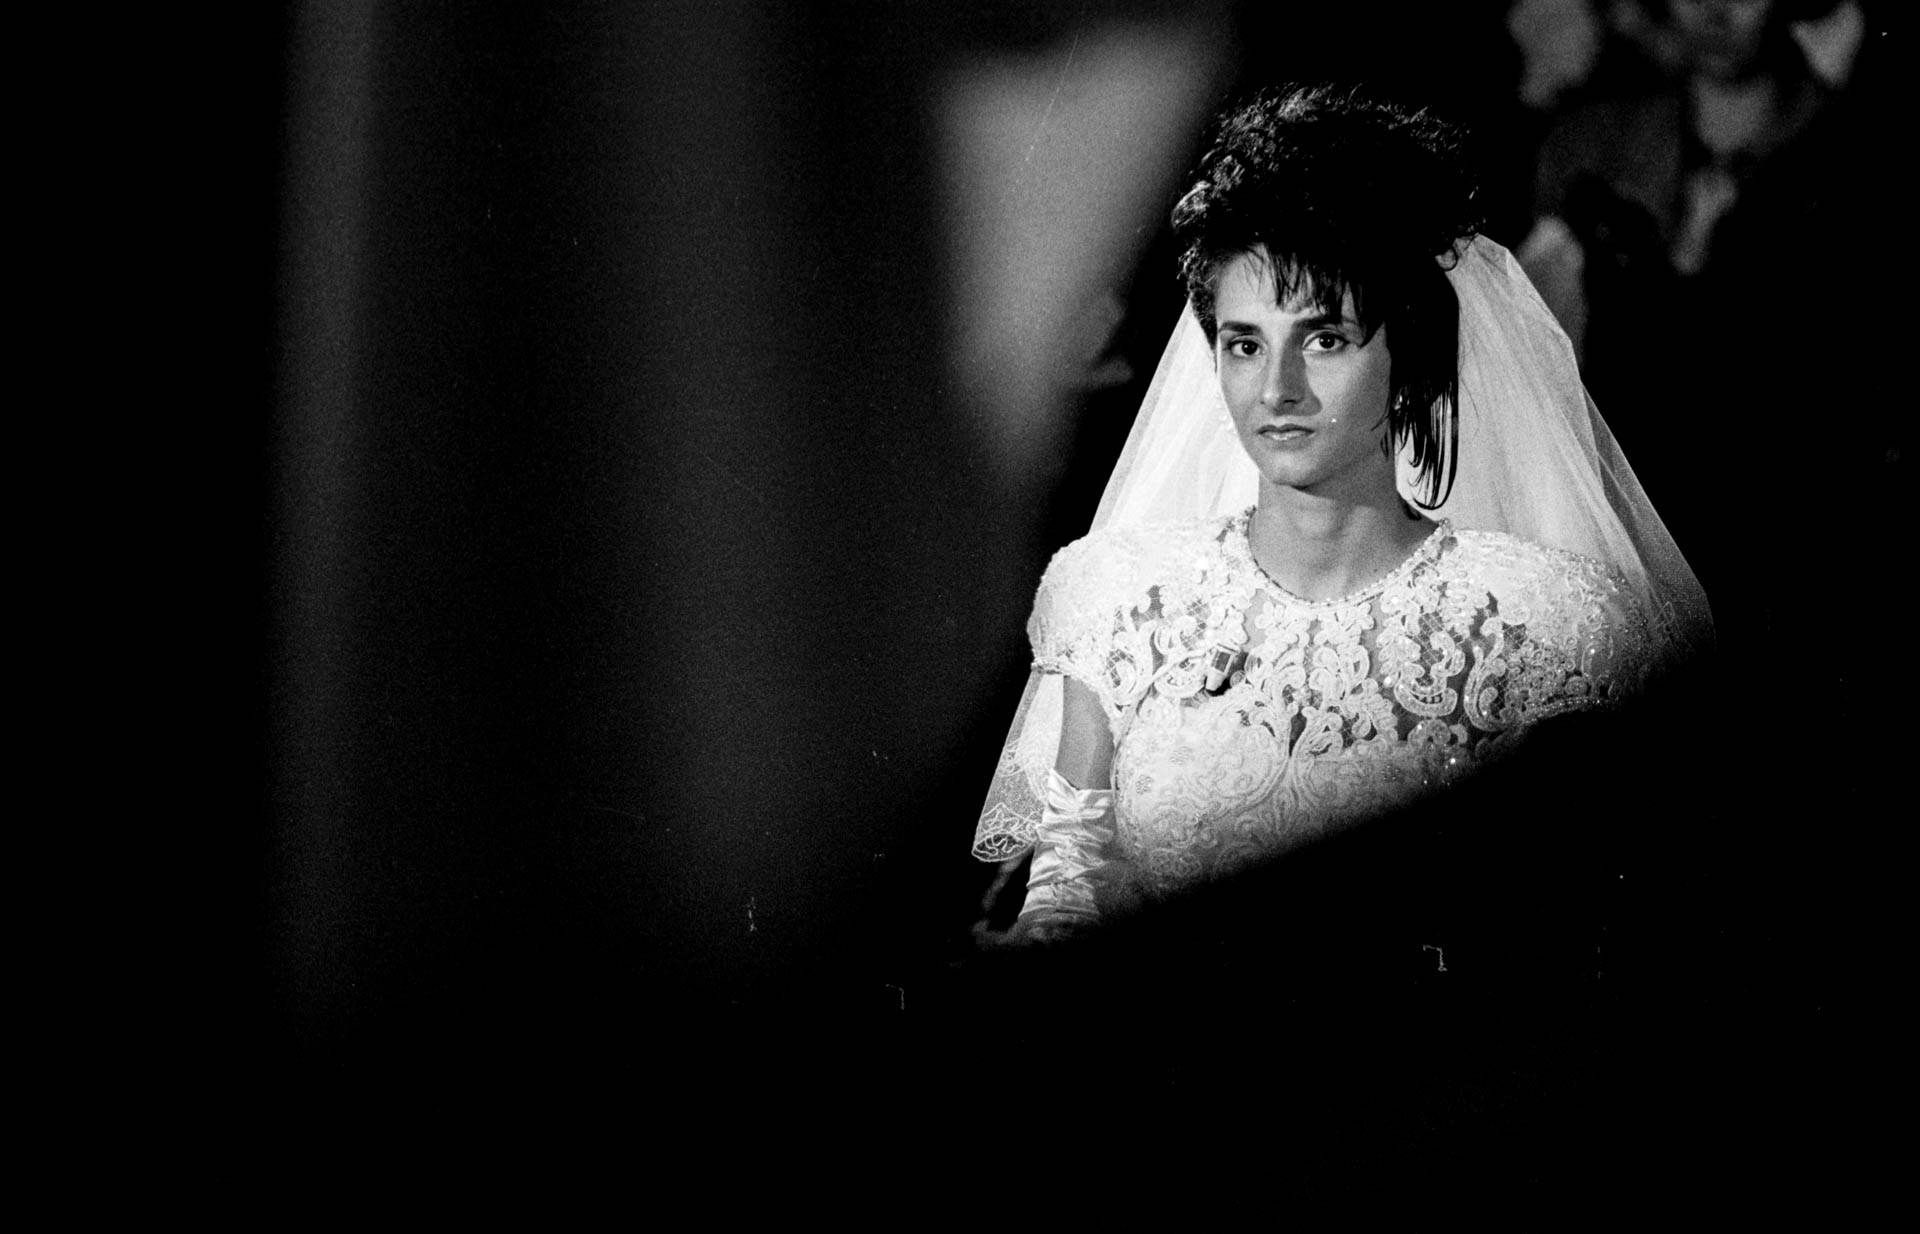  Matera, Italy - 19 October 1991 Italian Wedding.&nbsp; 